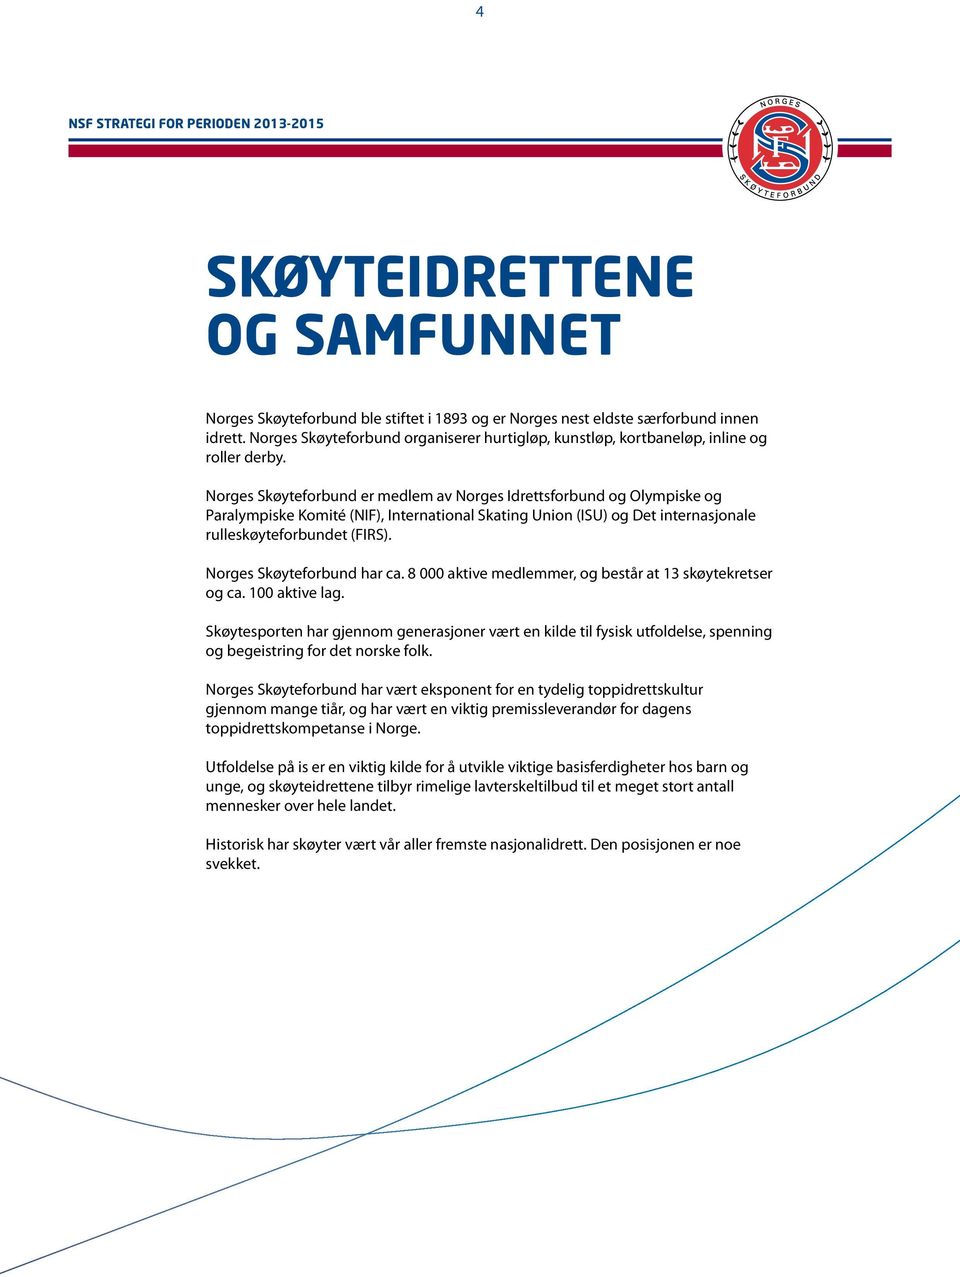 Norges Skøyteforbund er medlem av Norges Idrettsforbund og Olympiske og Paralympiske Komité (NIF), International Skating Union (ISU) og Det internasjonale rulleskøyteforbundet (FIRS).